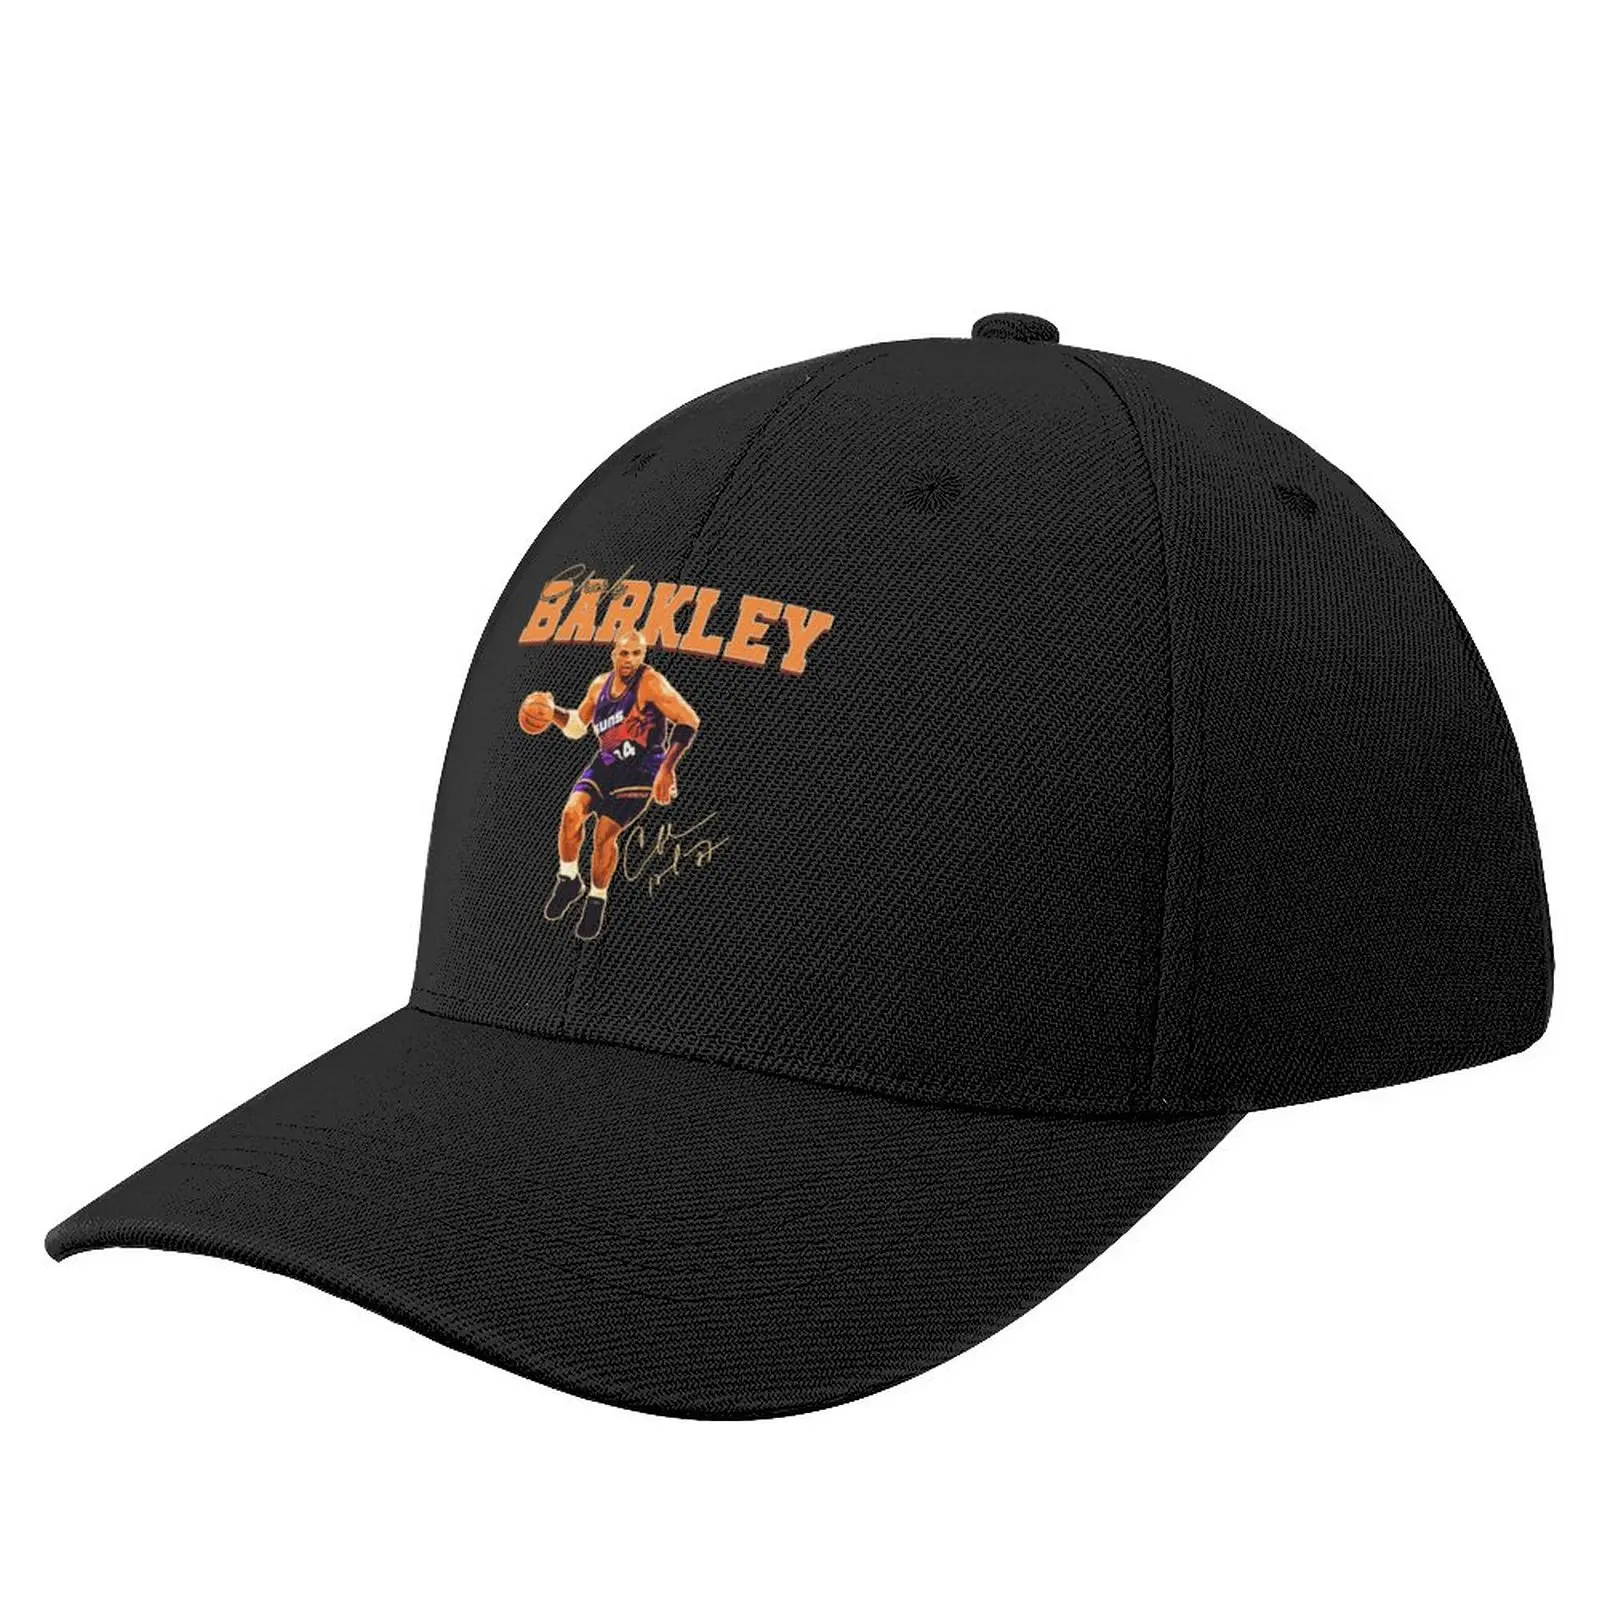 

Charles Barkley Chuck Basketball Vintage Retro 80s 90s Rap Style Baseball Cap Gentleman Hat Hat Women Men's